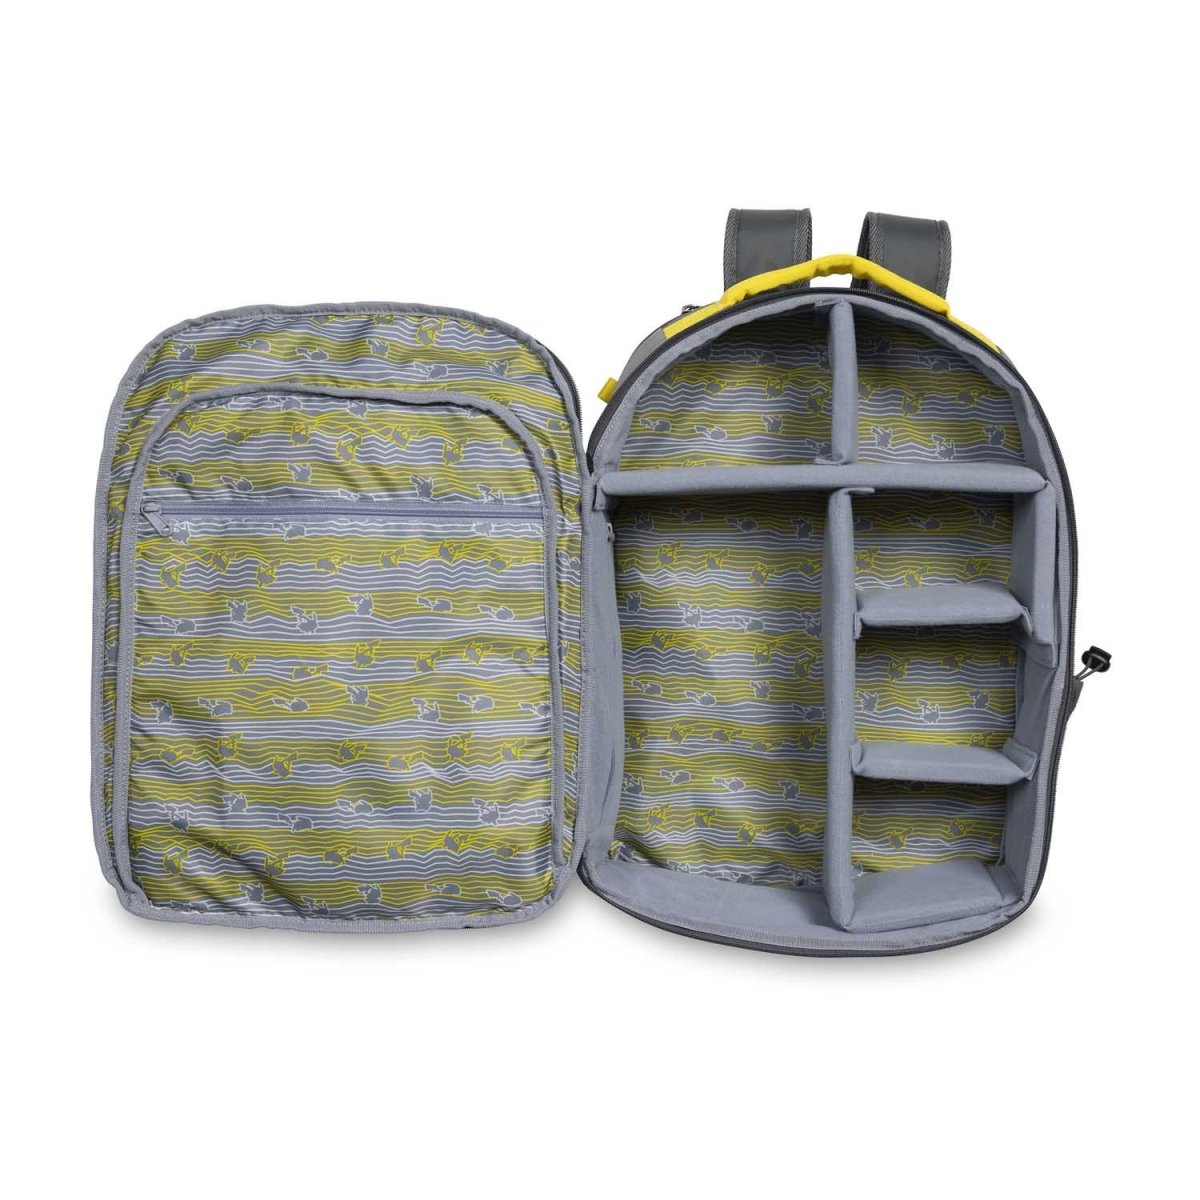 Pokémon Everyday Bags: Gray & Yellow TCG Backpack